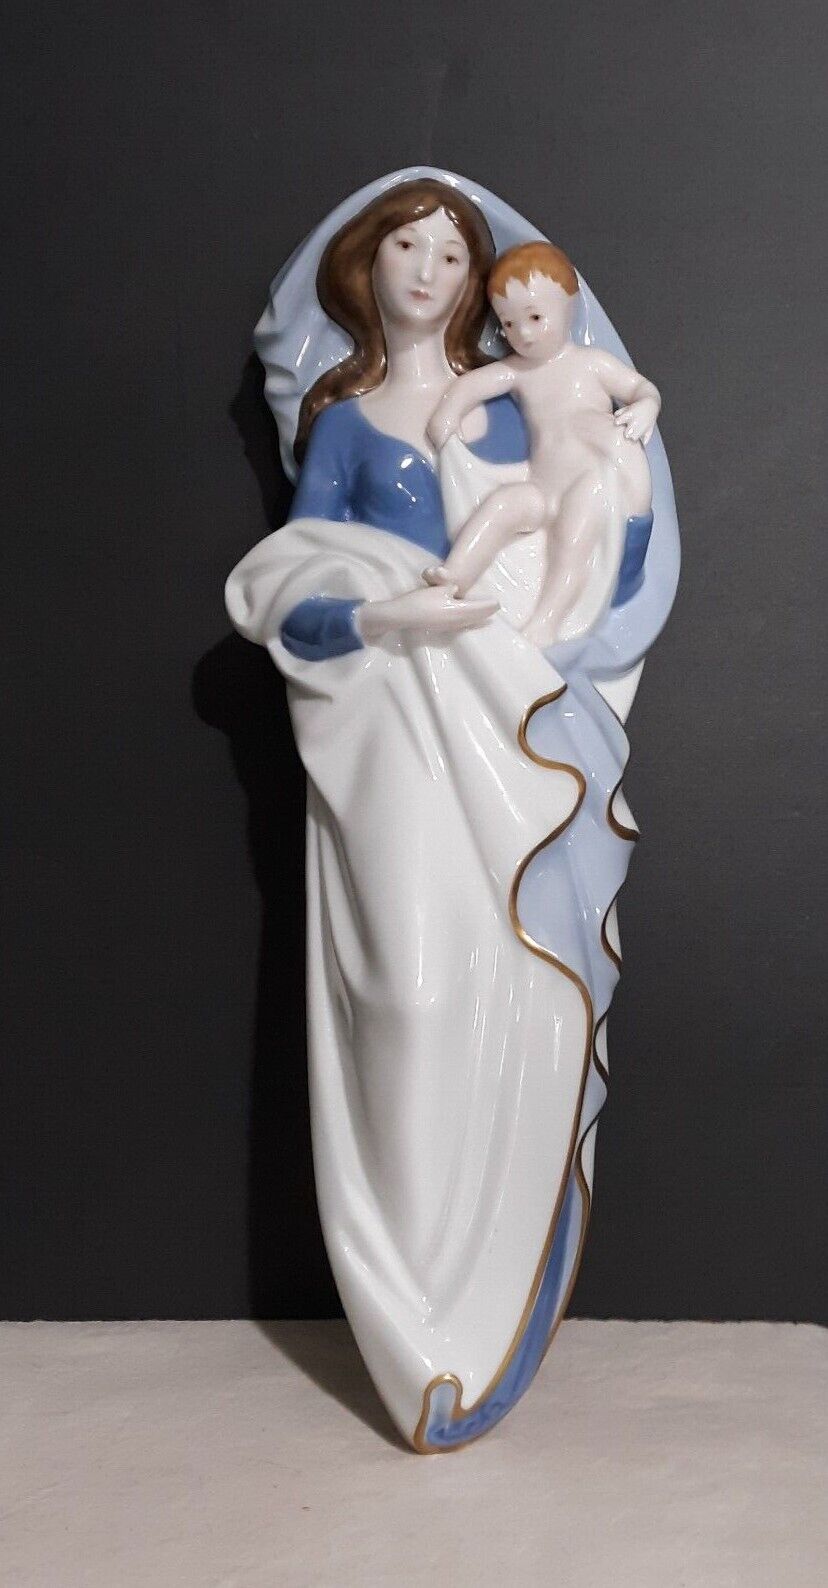 Vintage Goebel W. Germany Porcelain Madonna & Jesus Wall Art Figurine by A. Ruiz